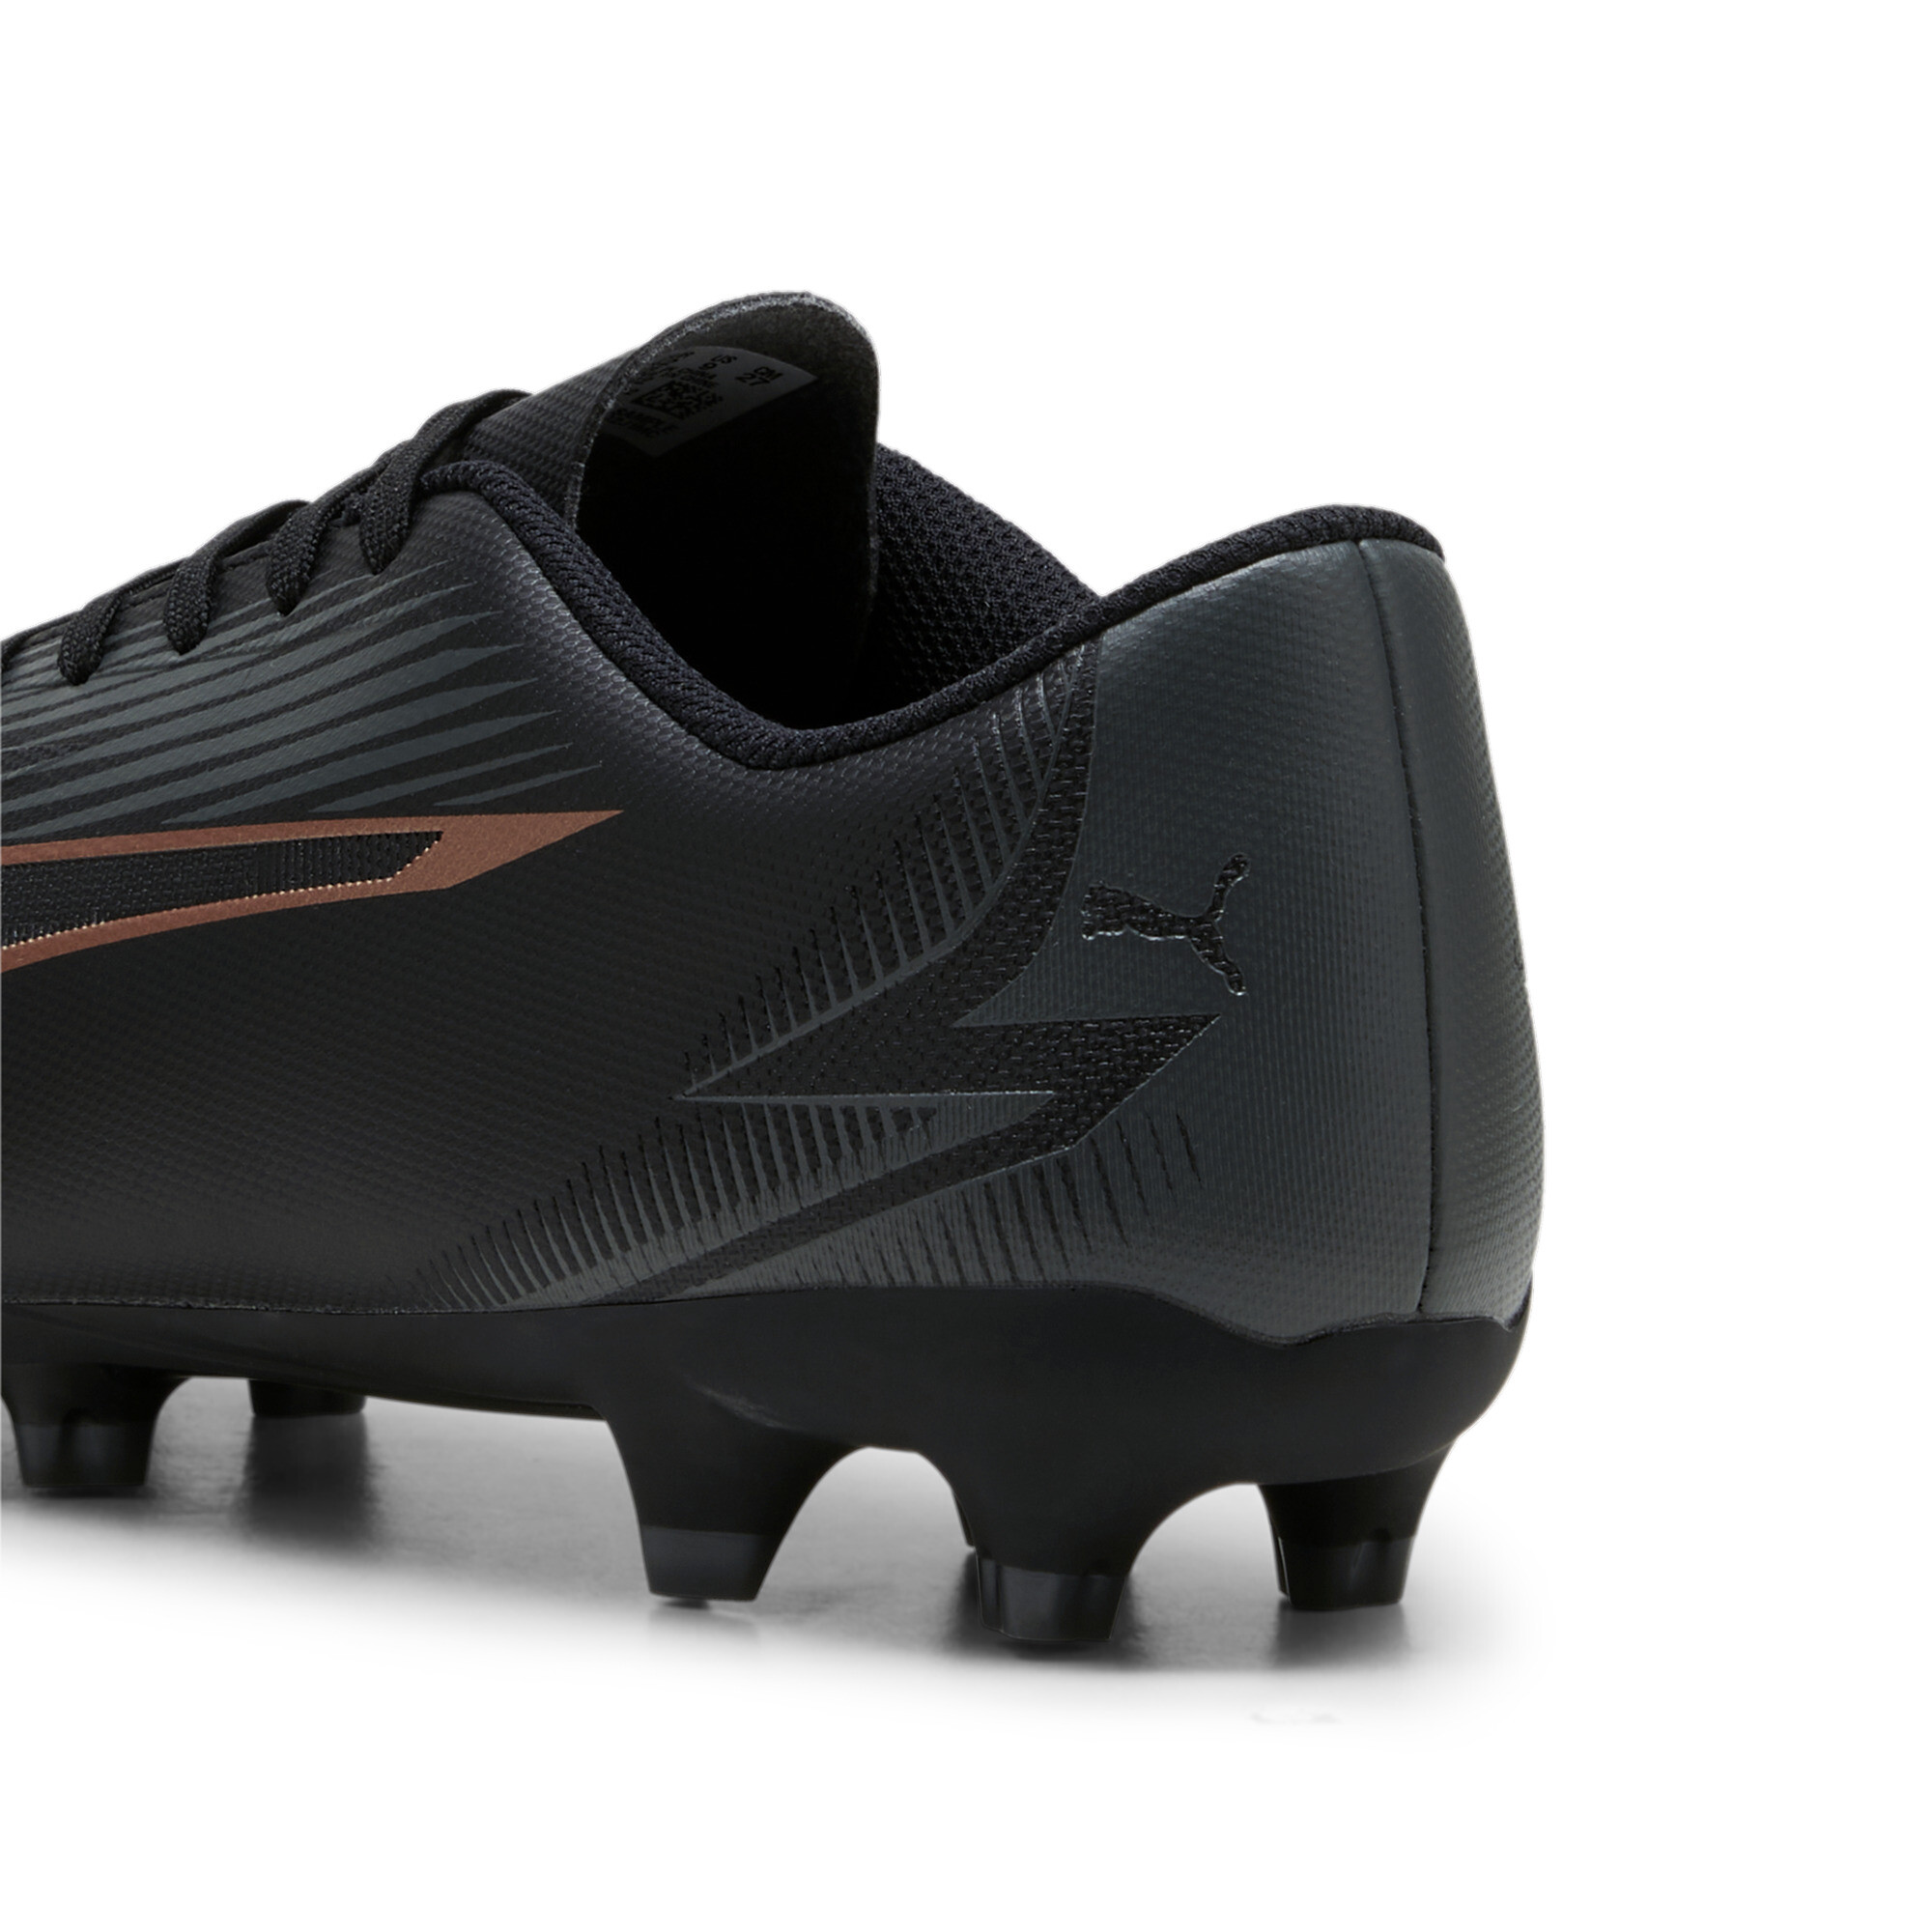 Men's PUMA ULTRA PLAY FG/AG Football Boots In Black, Size EU 41